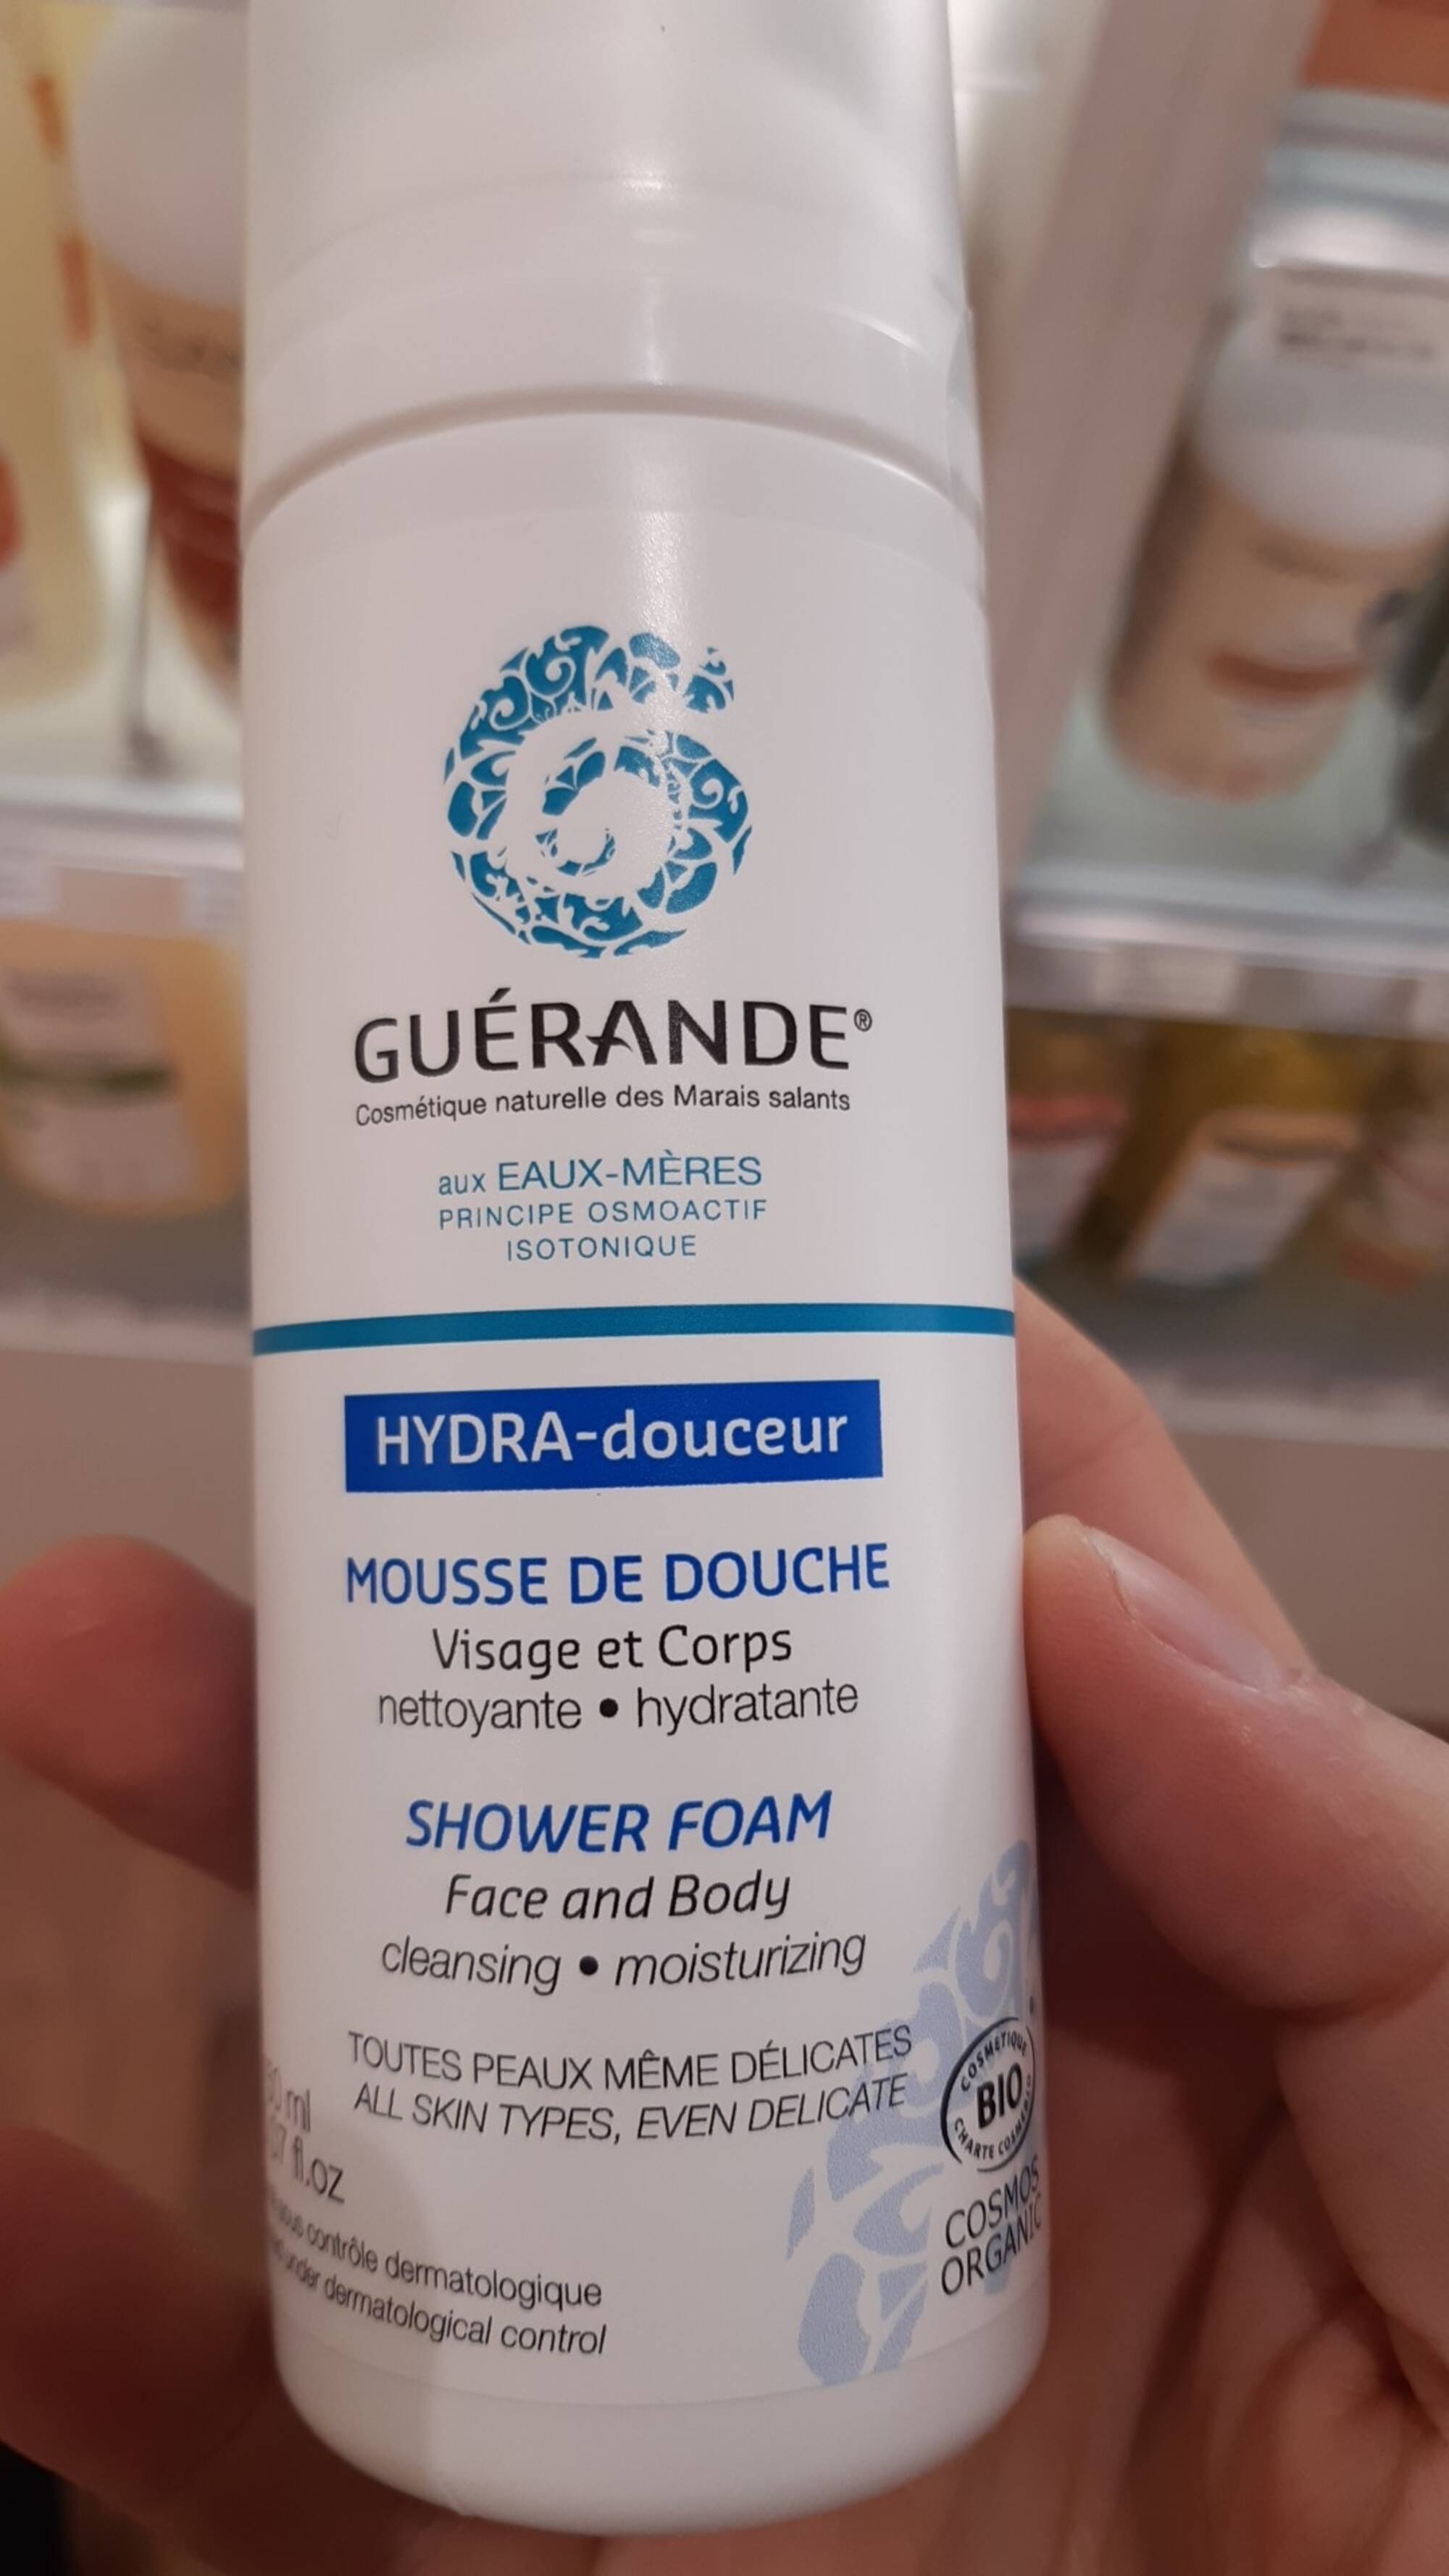 Soin fondant jeunesse : creme hydratante naturelle par Guérande